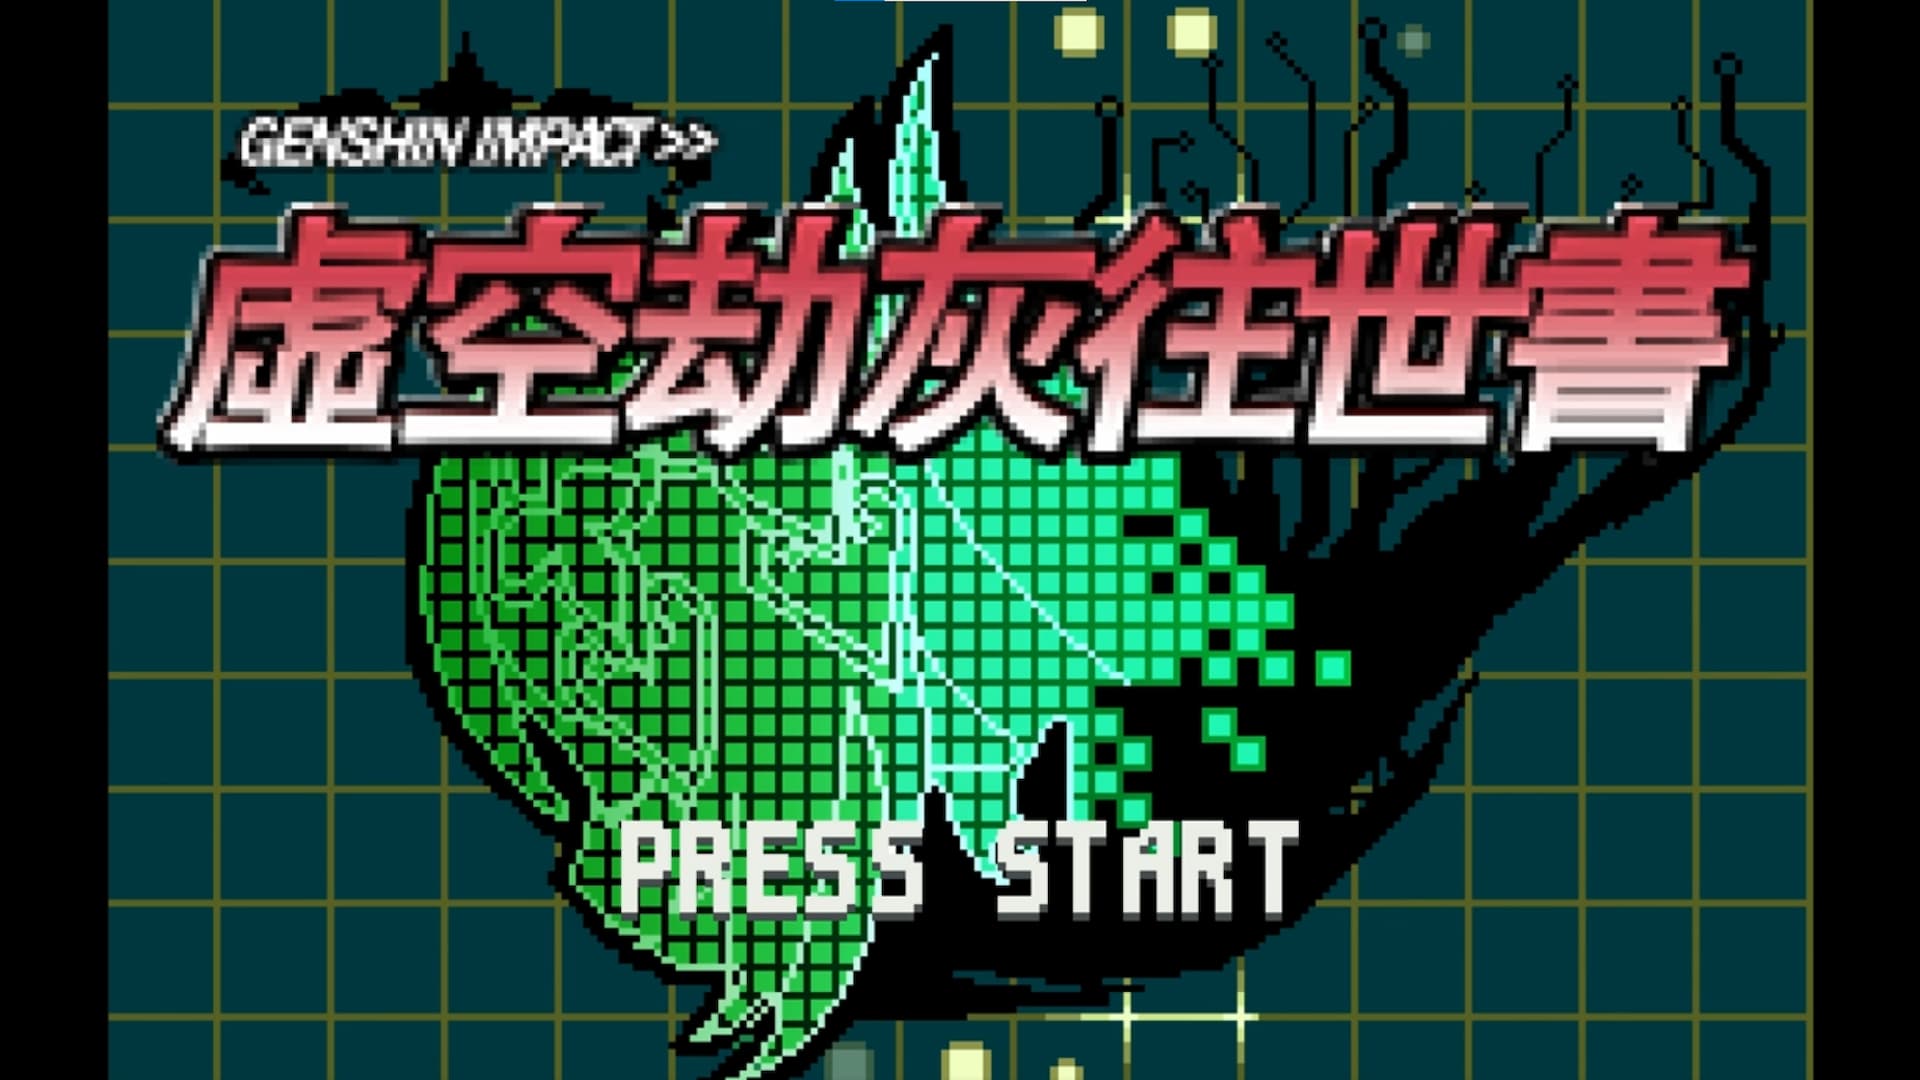 This Genshin Impact demake references GBA Mega Man title screens: green pixel art title screen